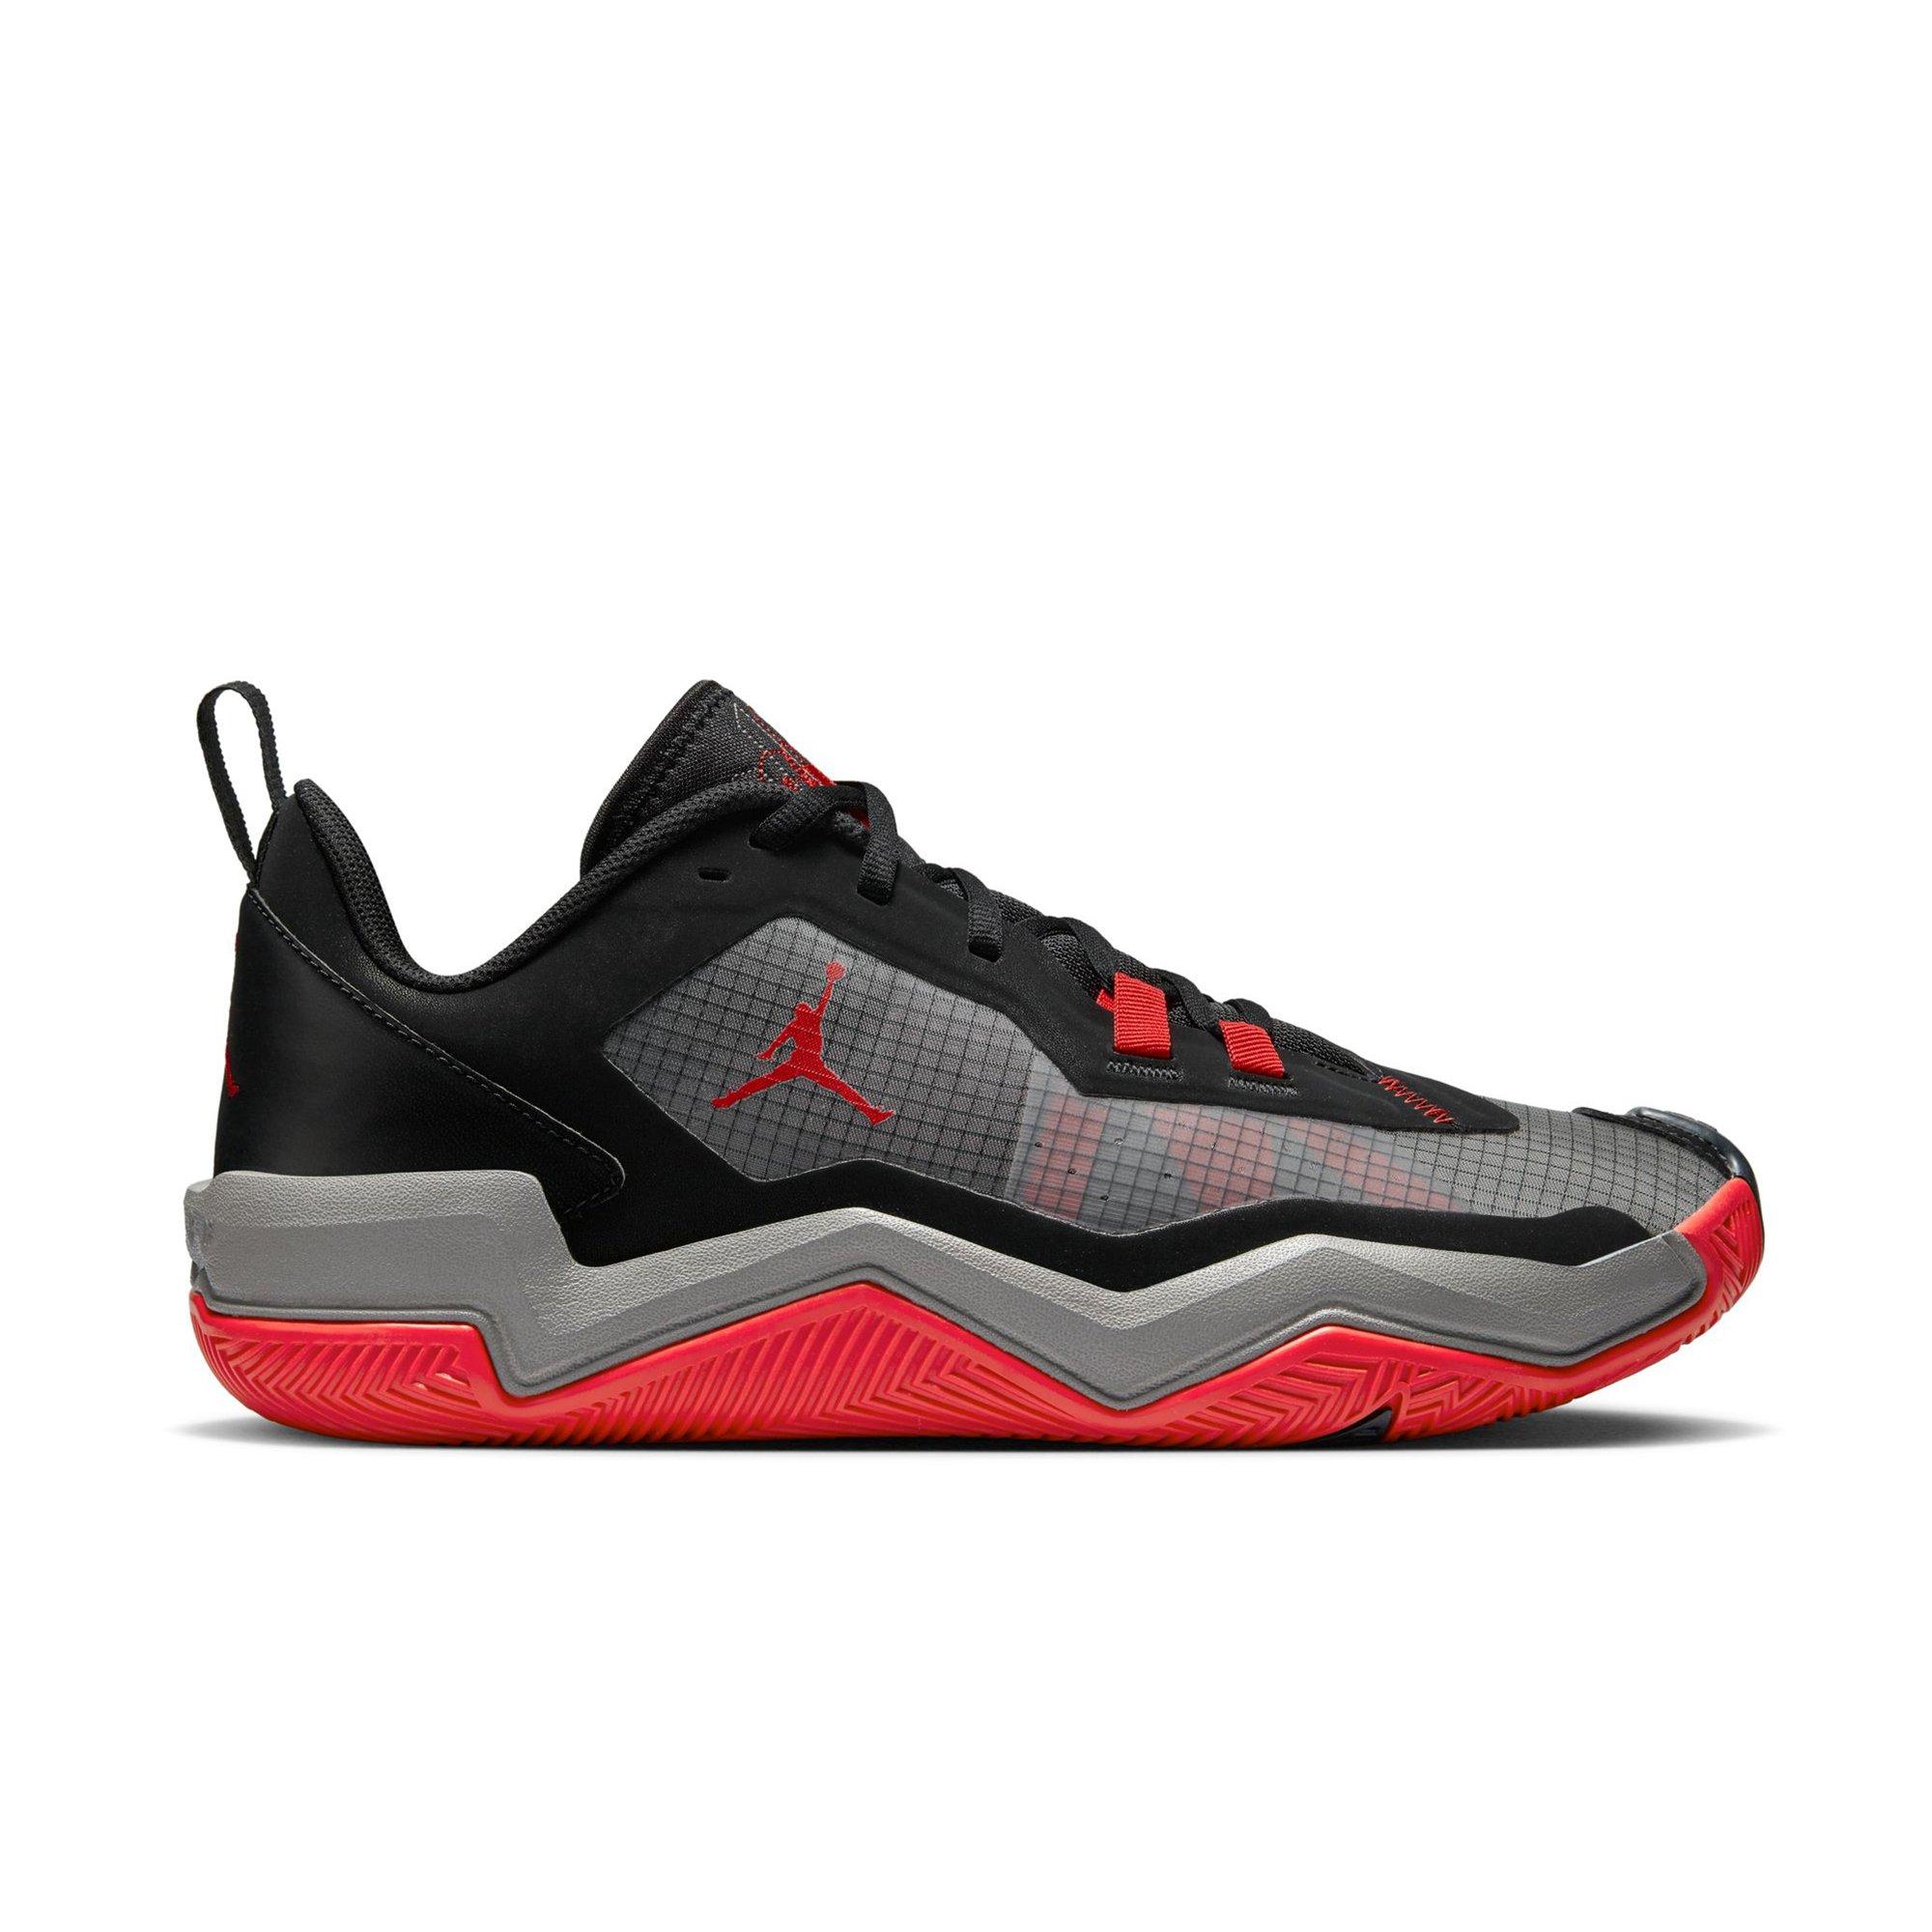 Jordan One 4 "Black/University Red/White/Flat Men's Shoe